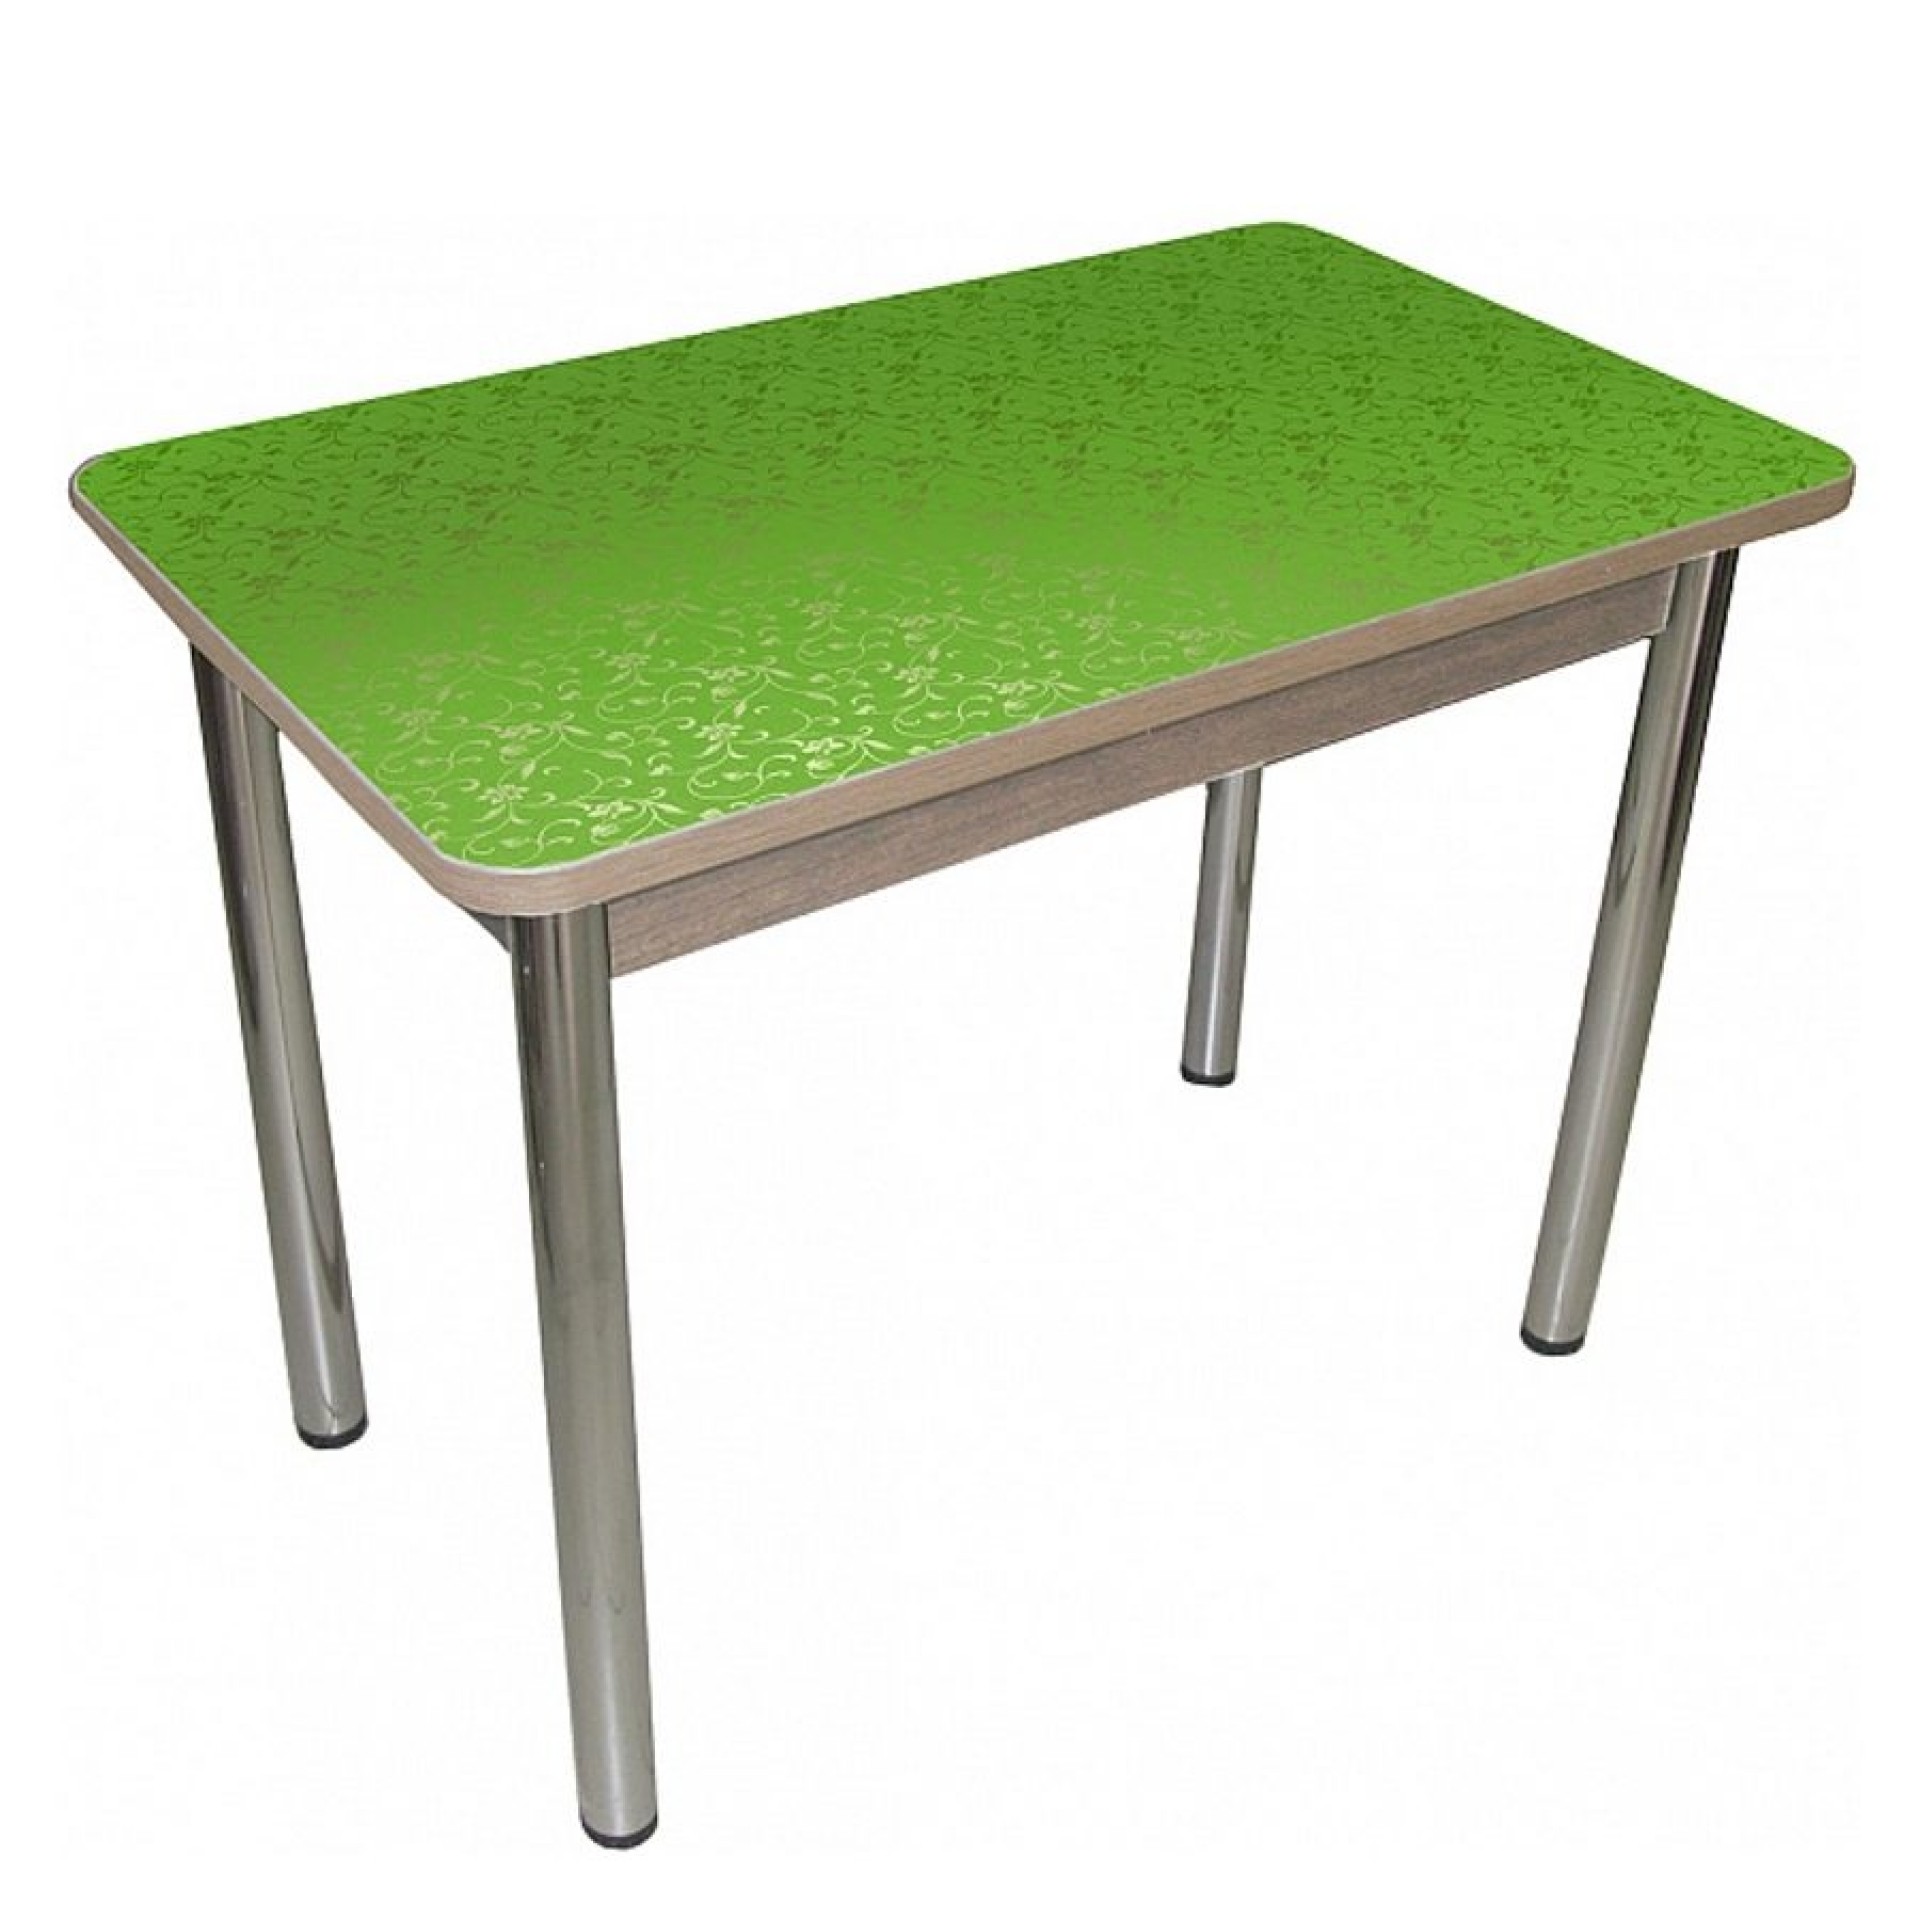 Стол кухонный гомель. Стол Милтон 2 Столпром. Стол кухонный. Зеленый стол. Стол дачный.